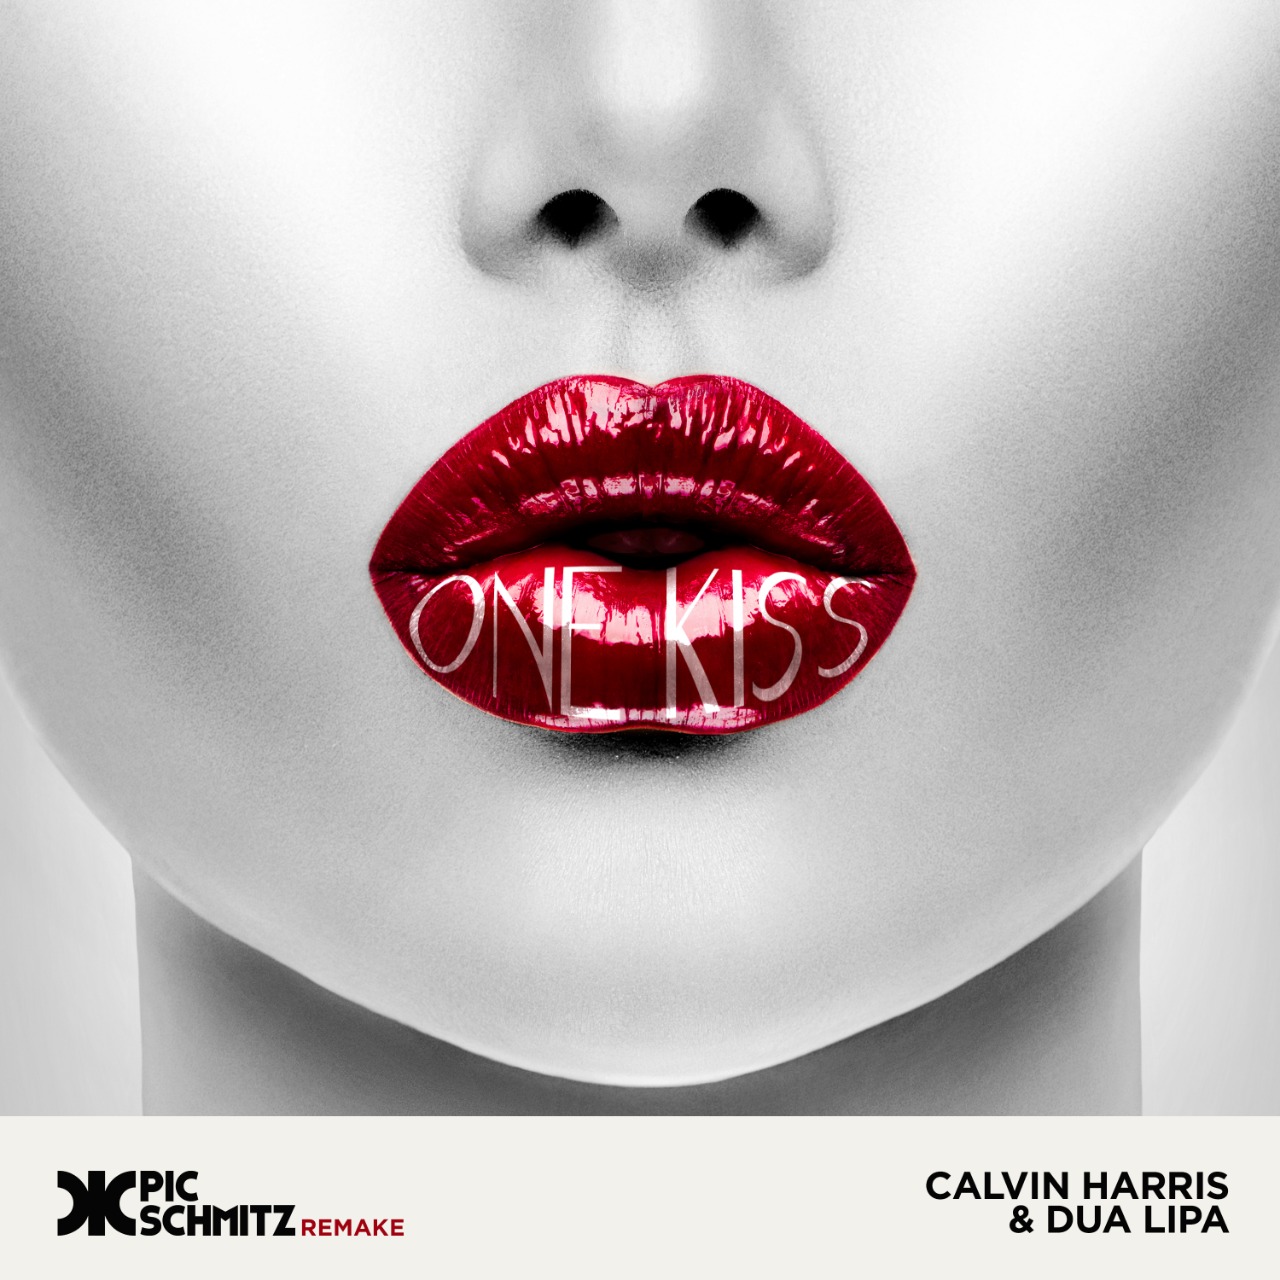 One Kiss (Pic Schmitz Remake) | Calvin Harris & Dua Lipa